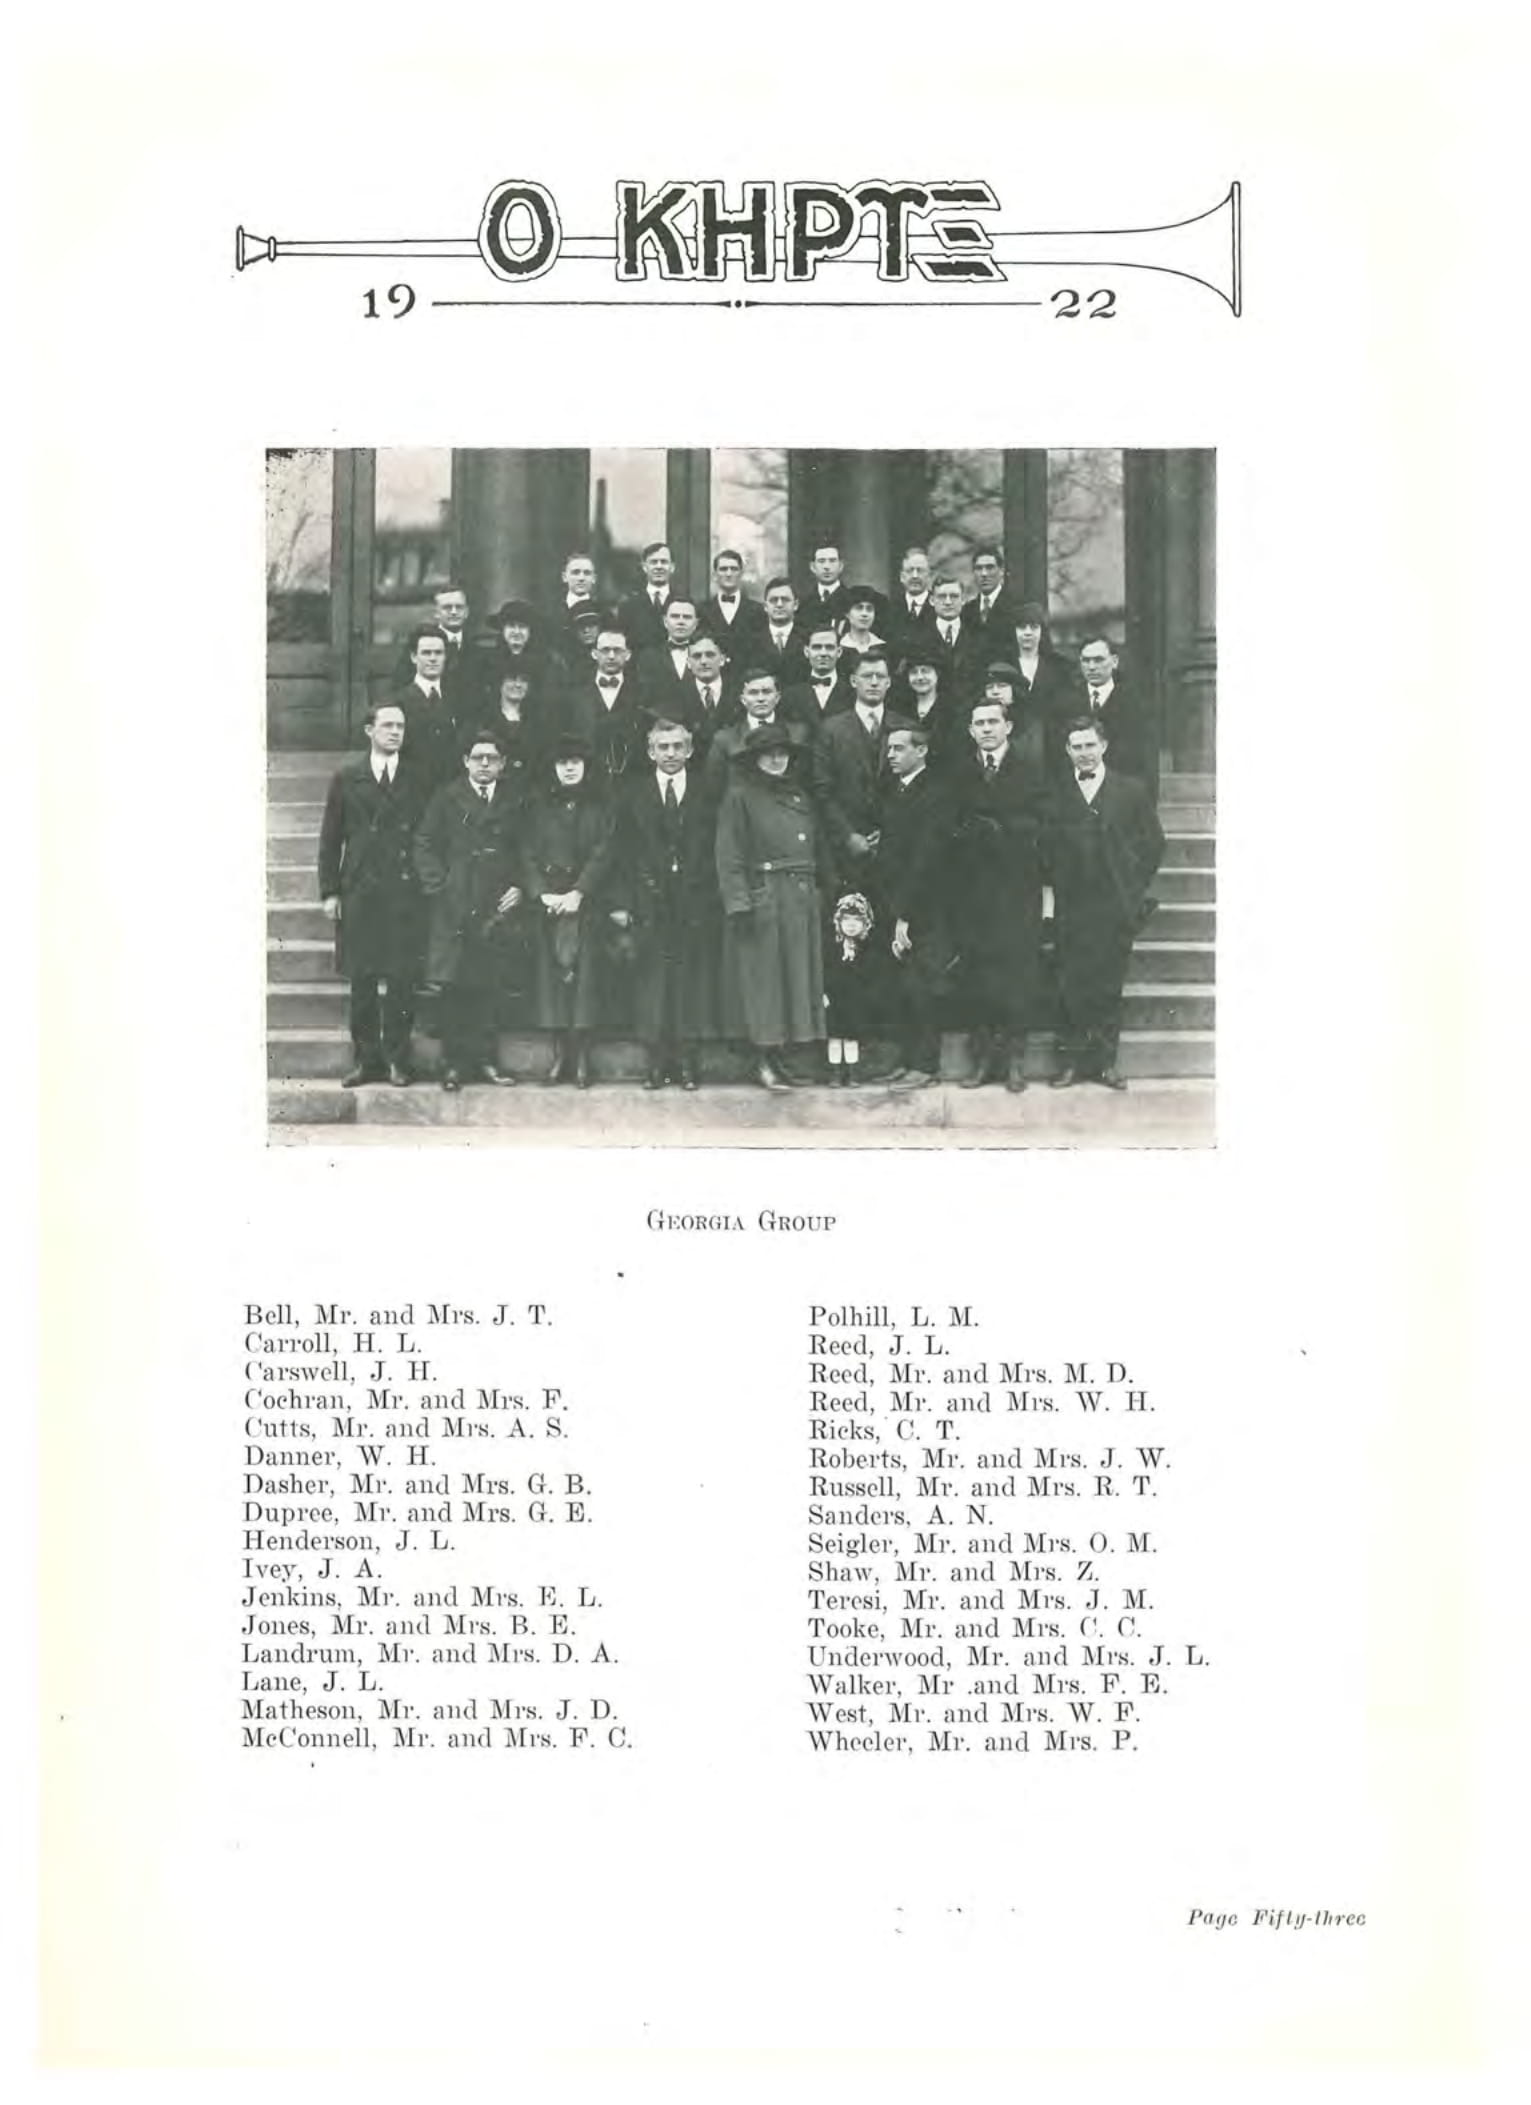 Southern Seminary annual (O Kerux) 1922-059.jpg